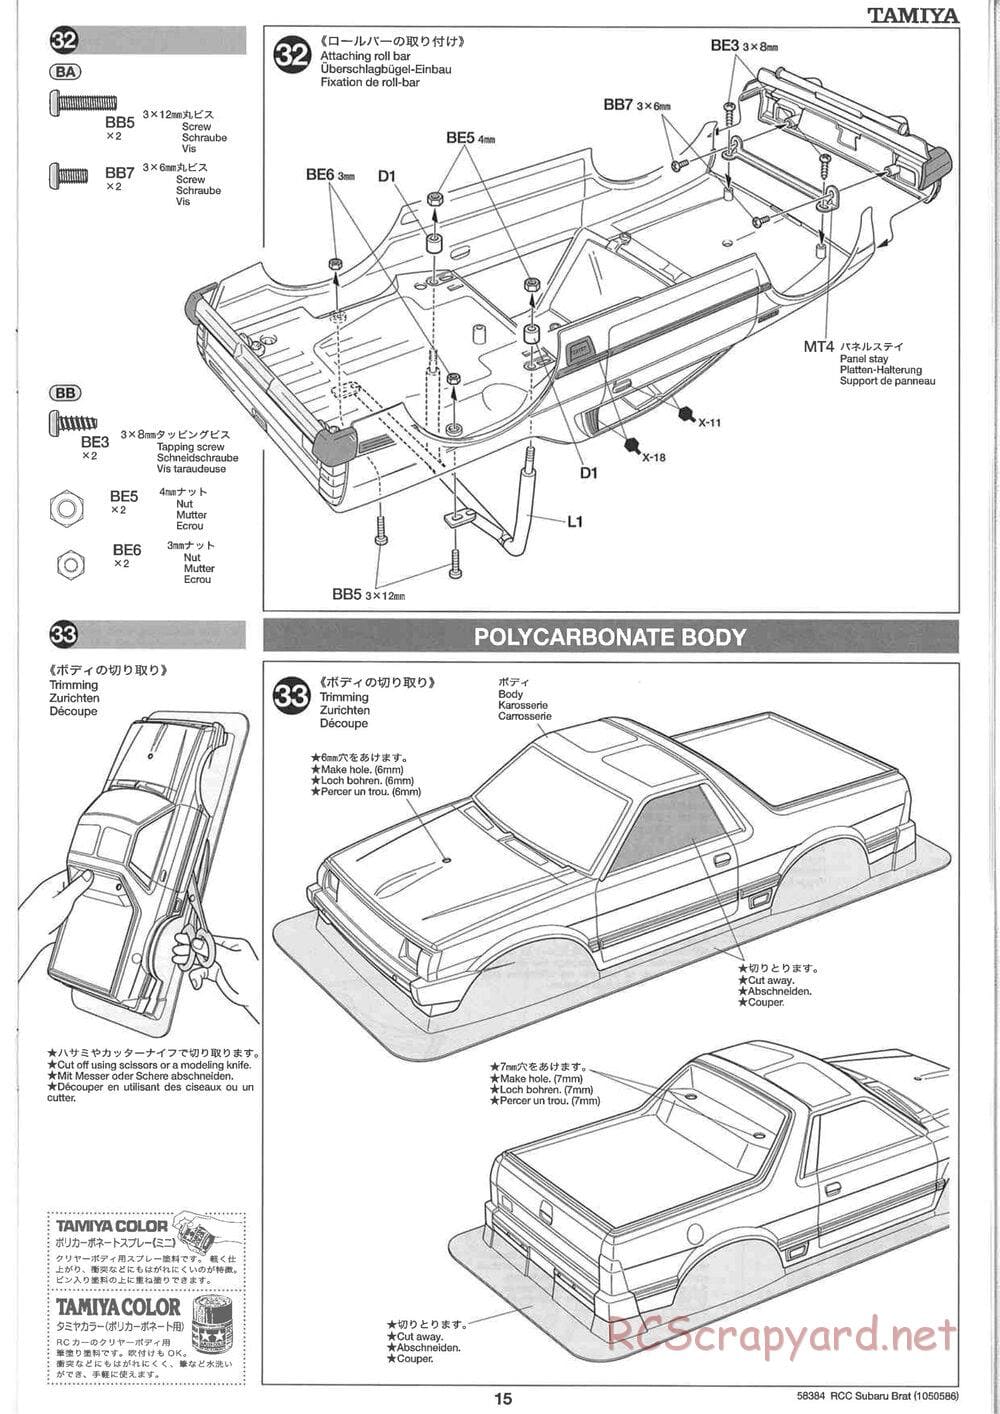 Tamiya - Subaru Brat 2007 - ORV Chassis - Manual - Page 15